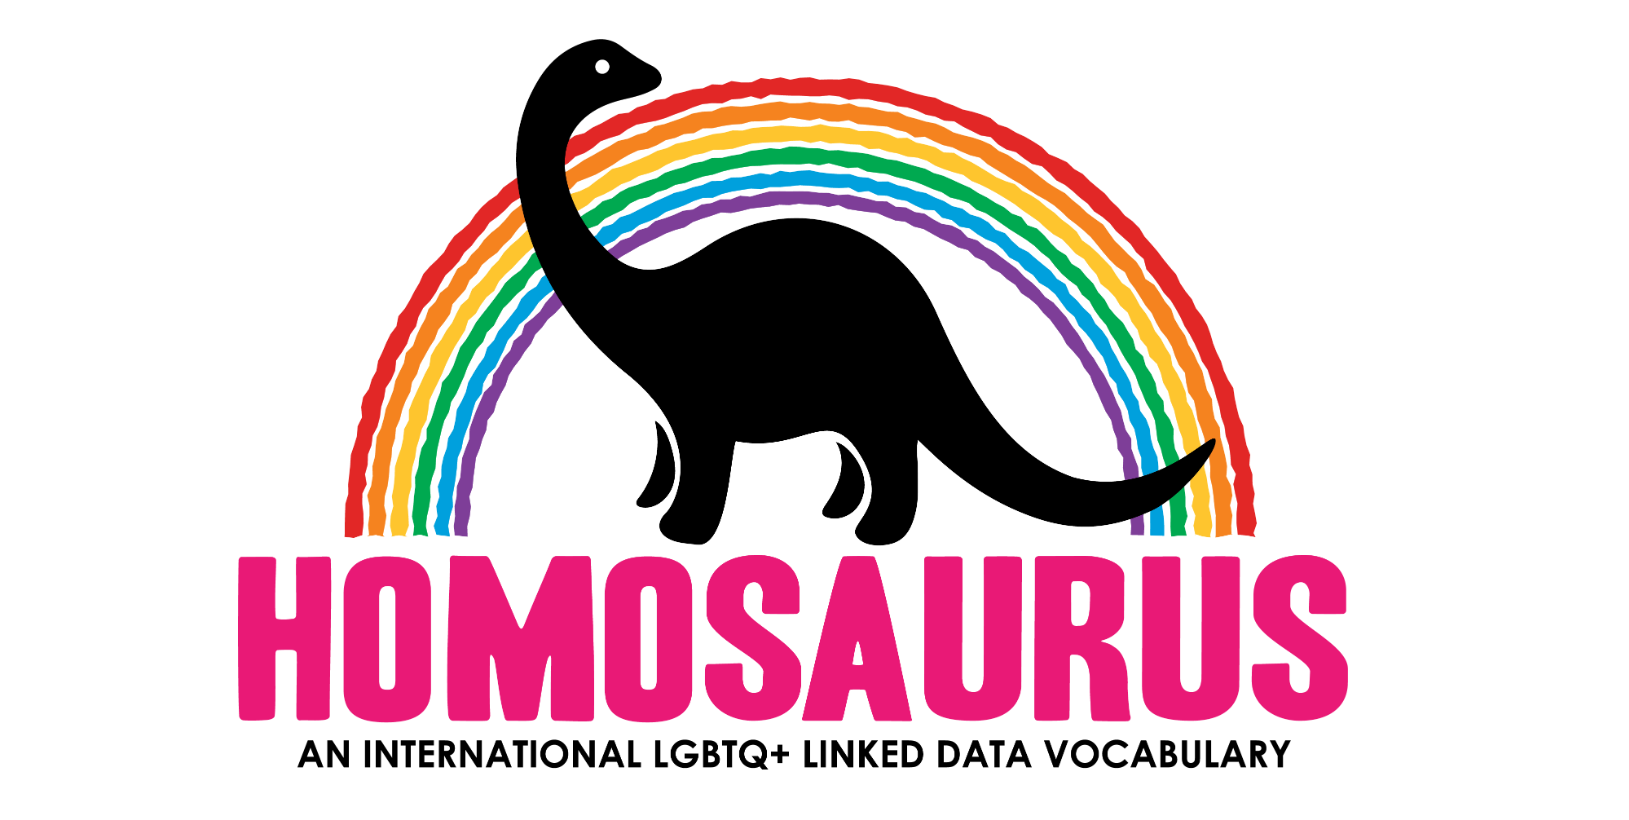 Homosaurus logo; a dinosaur silhouette standing front of a rainbow. 'Homosaurus, an international LGBTQ+ linked data vocabulary'